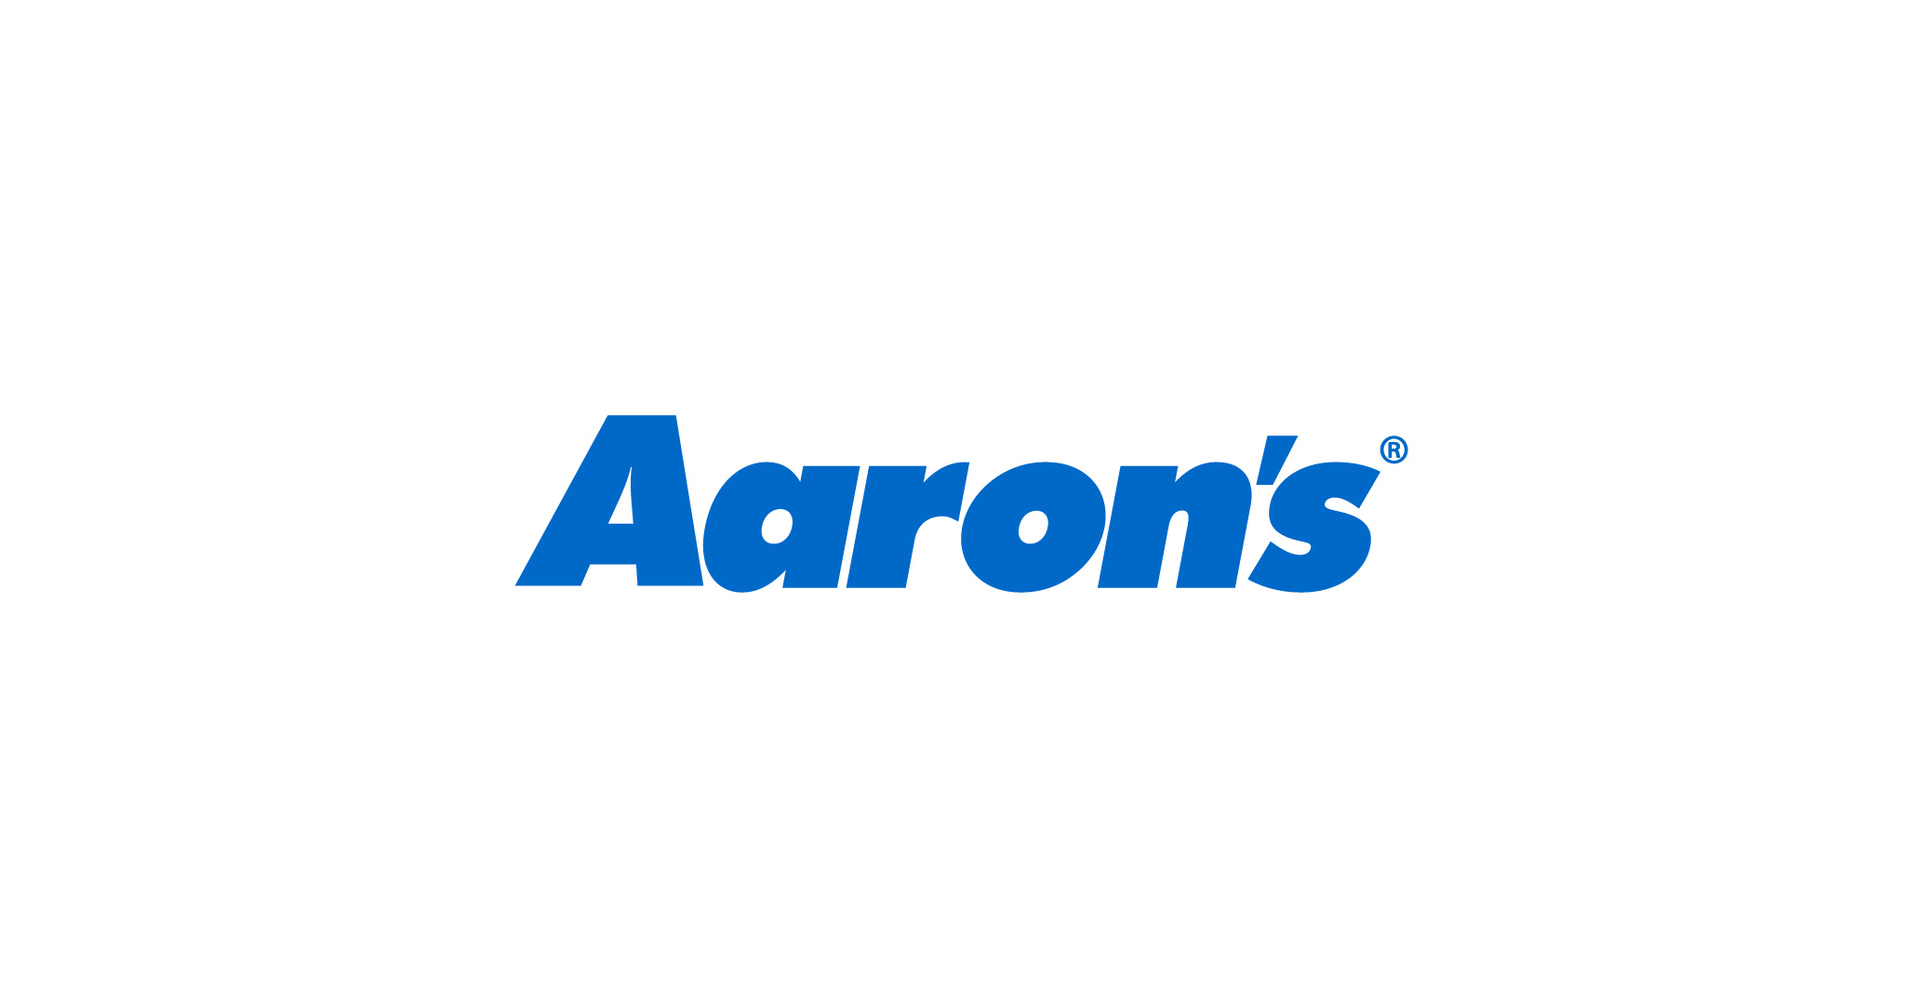 The Aaron’s Company, Inc. logo